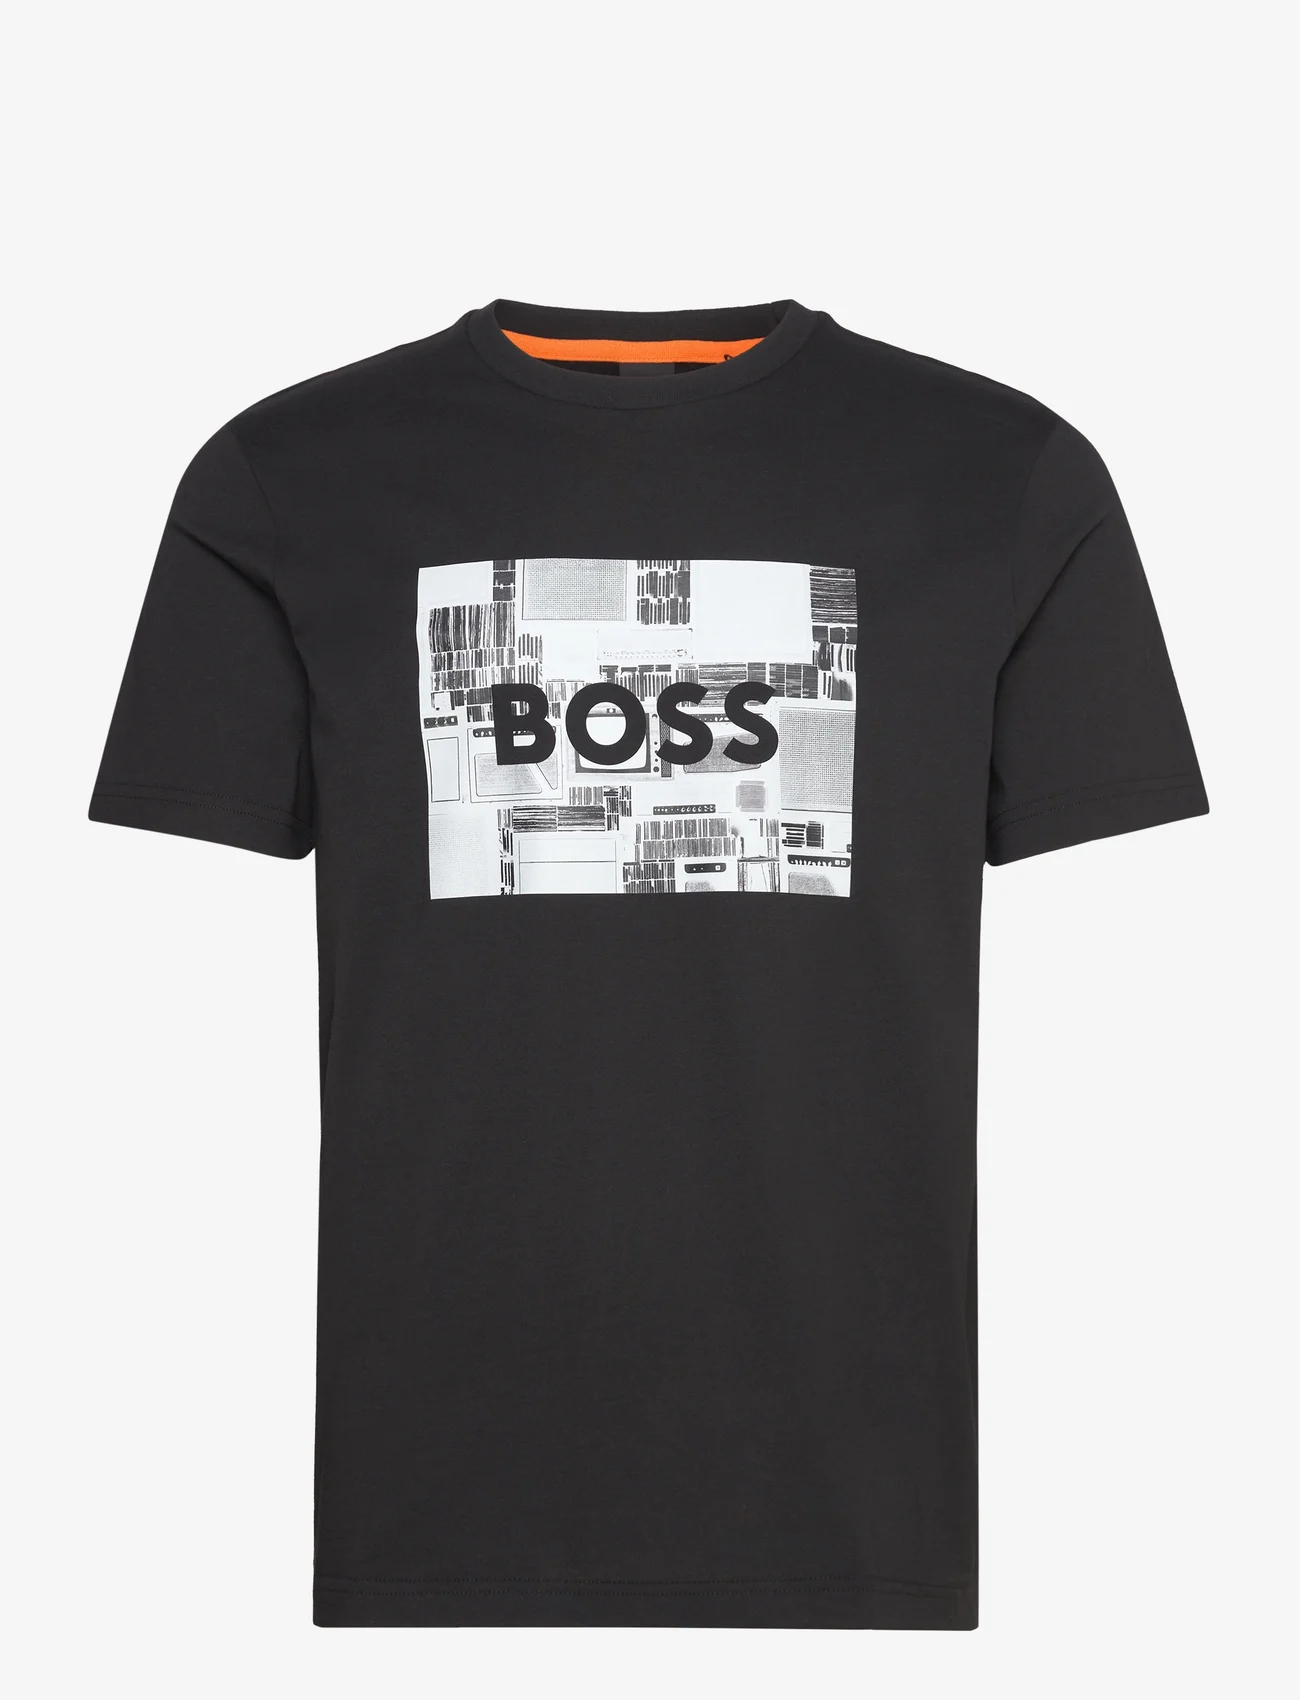 BOSS - Teeheavyboss - short-sleeved t-shirts - black - 0